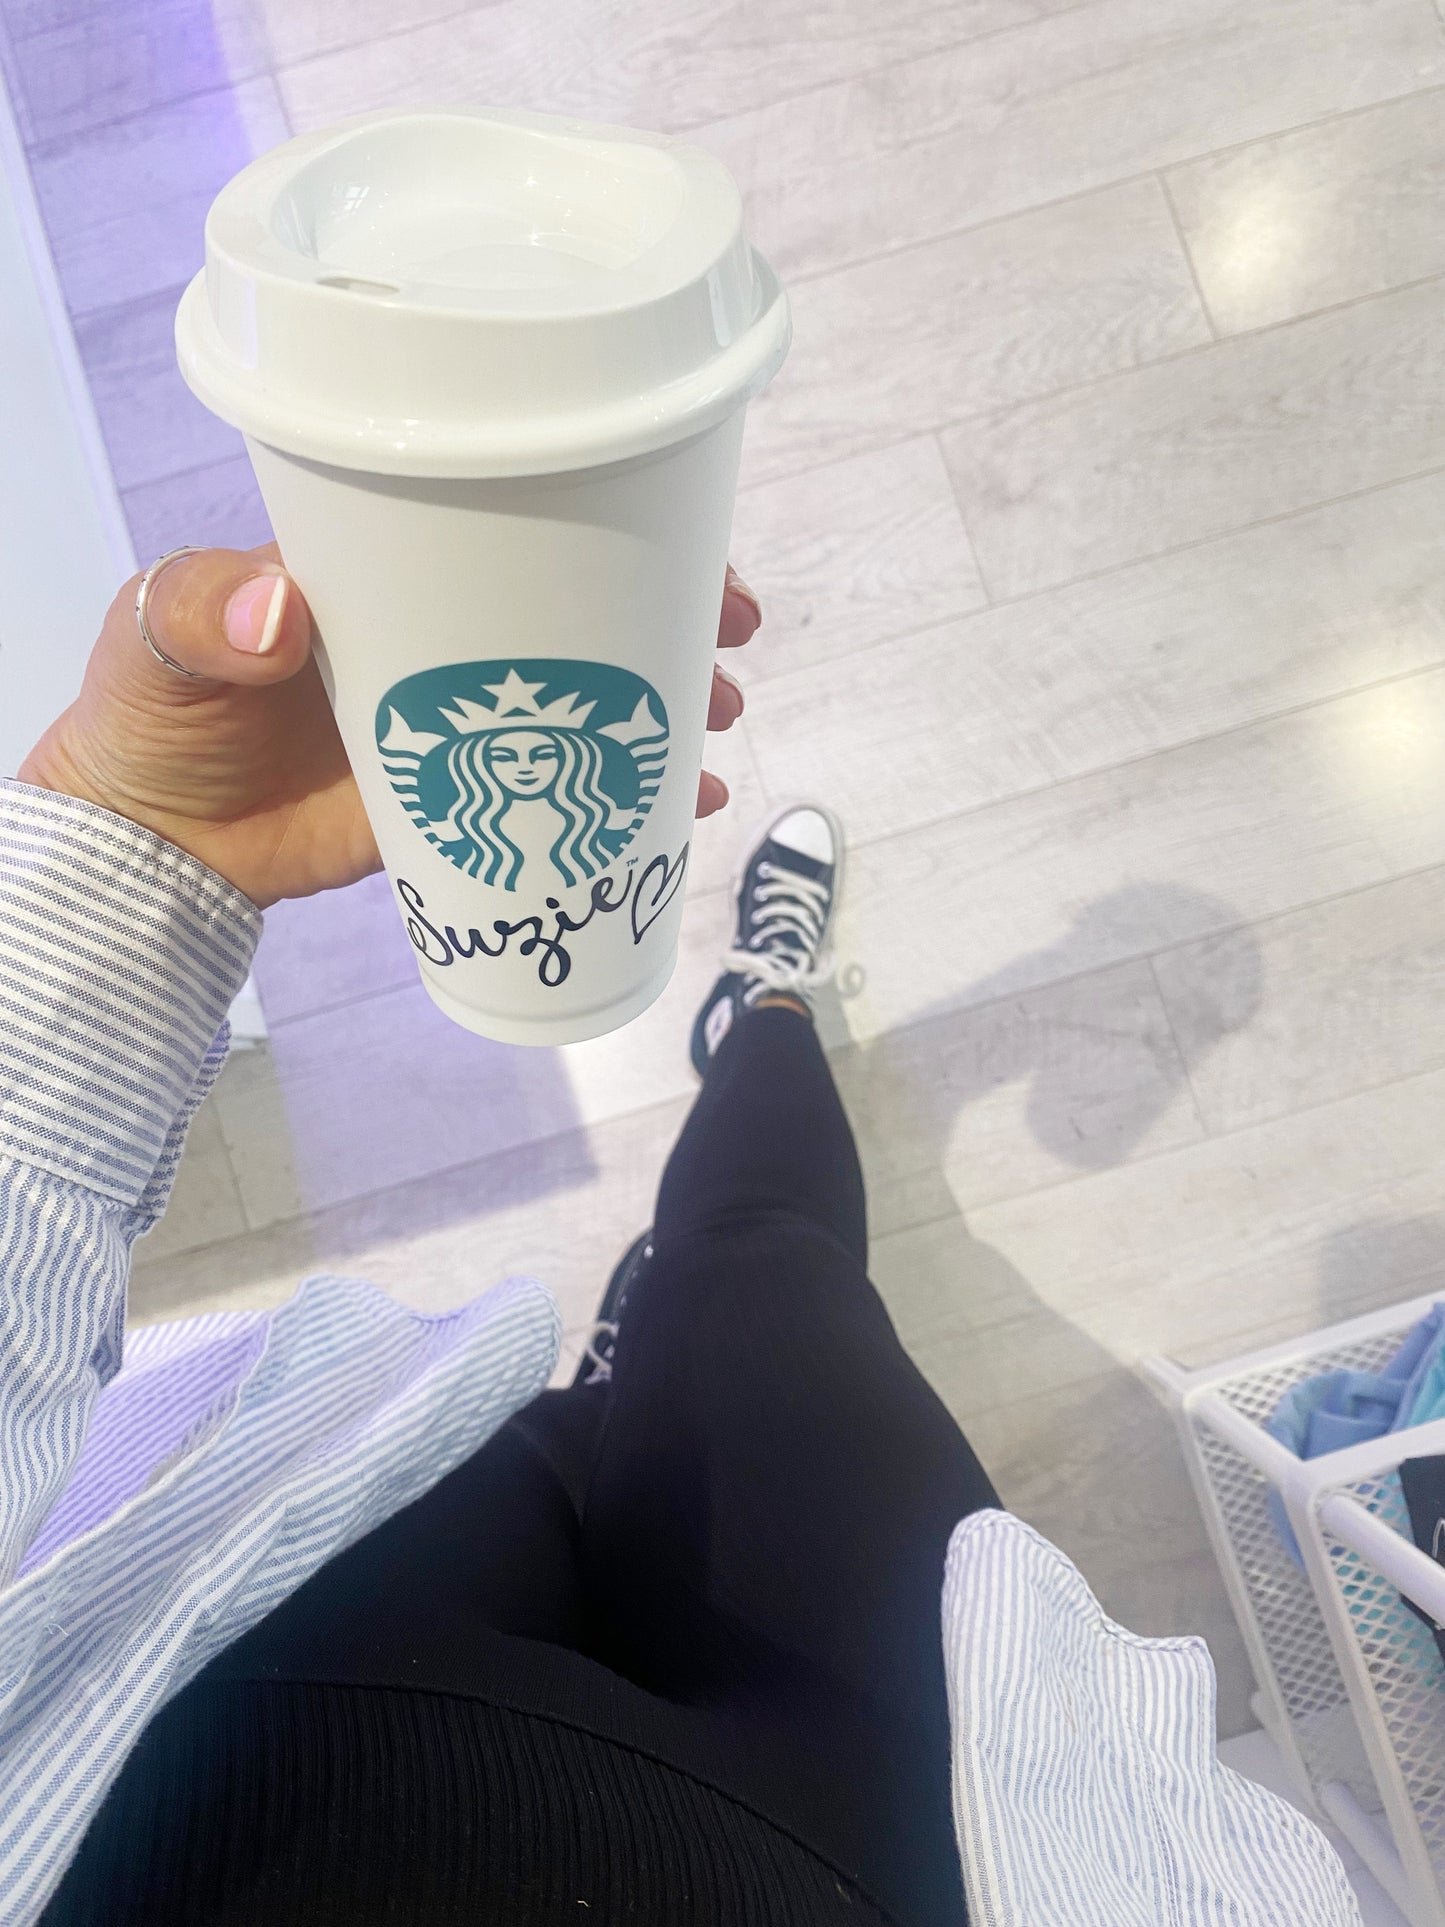 Starbucks Hot Coffee Cup UK